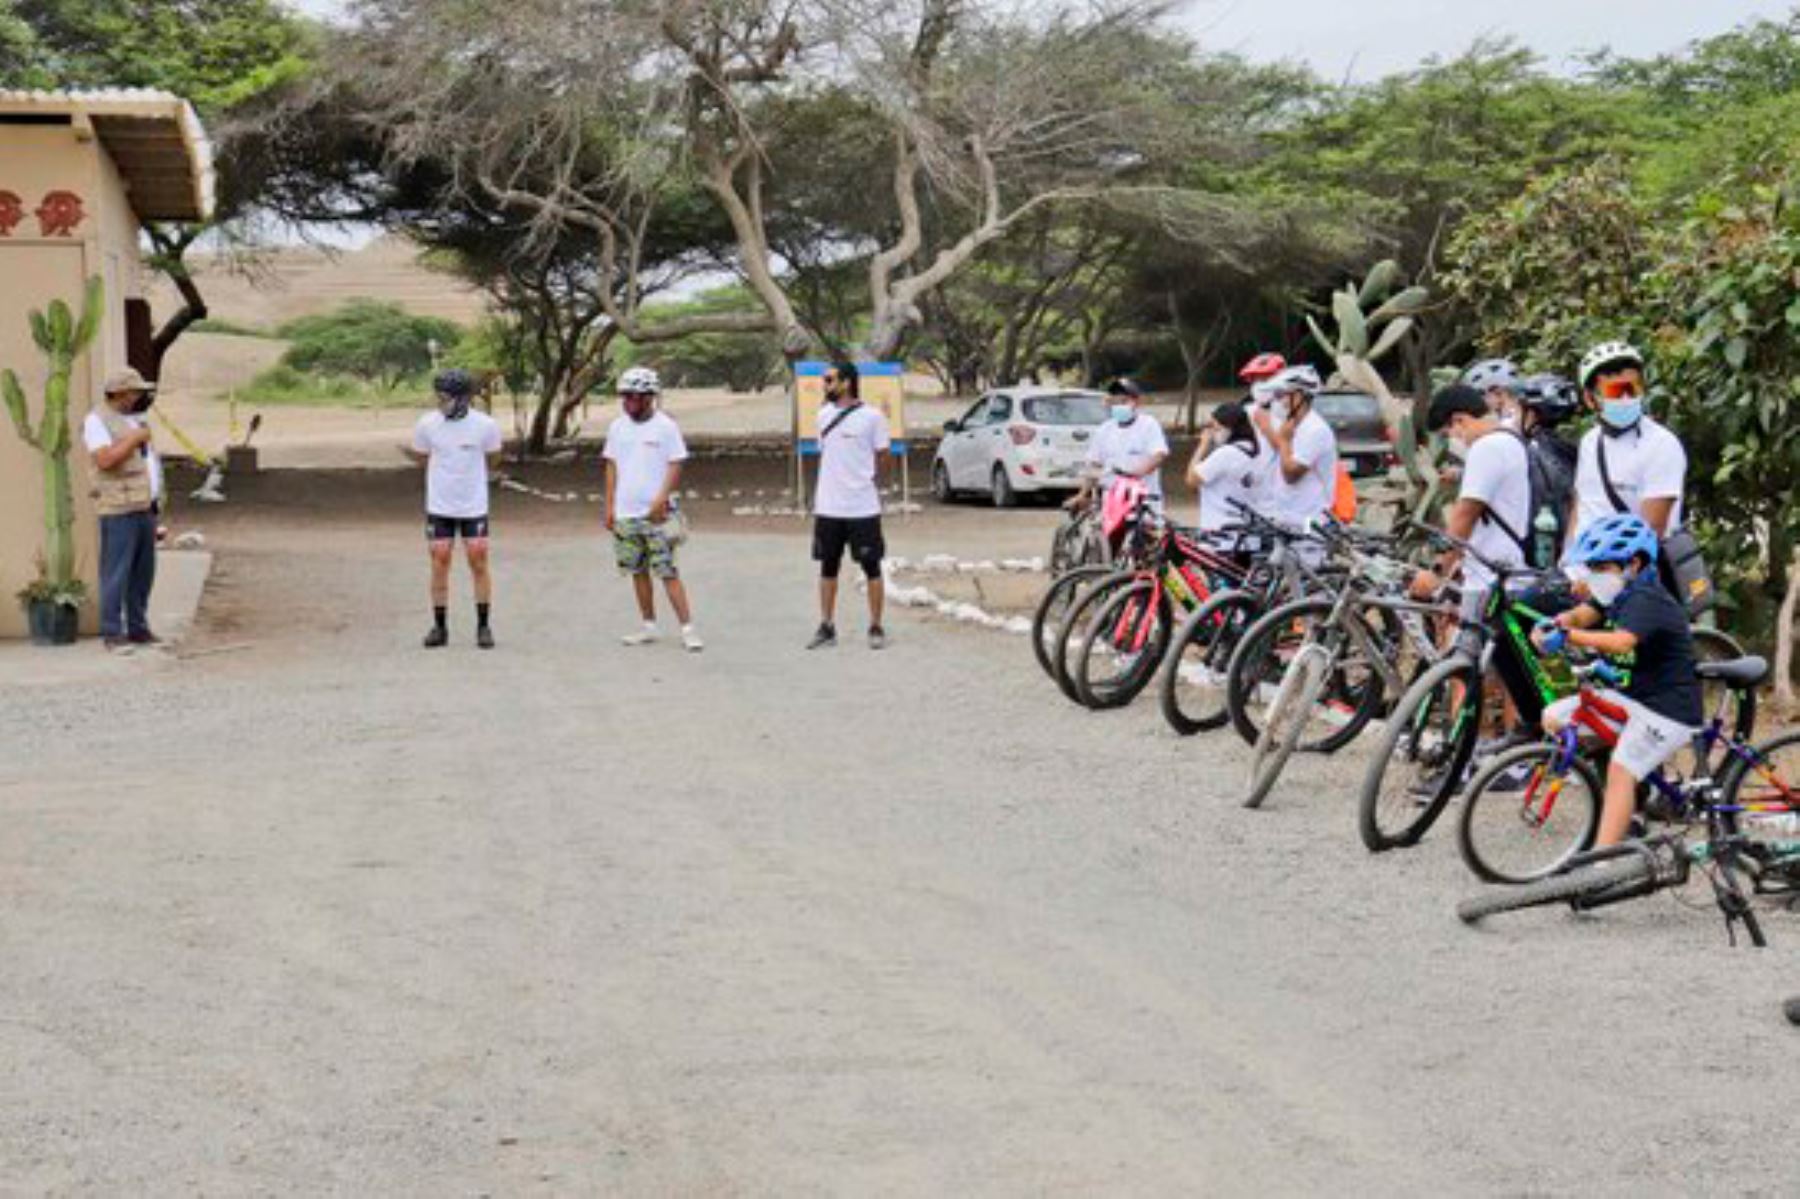 En total participaron 35 ciclistas de diversas edades que fueron guiados por un arqueólogo. Foto: ANDINA/Mincul